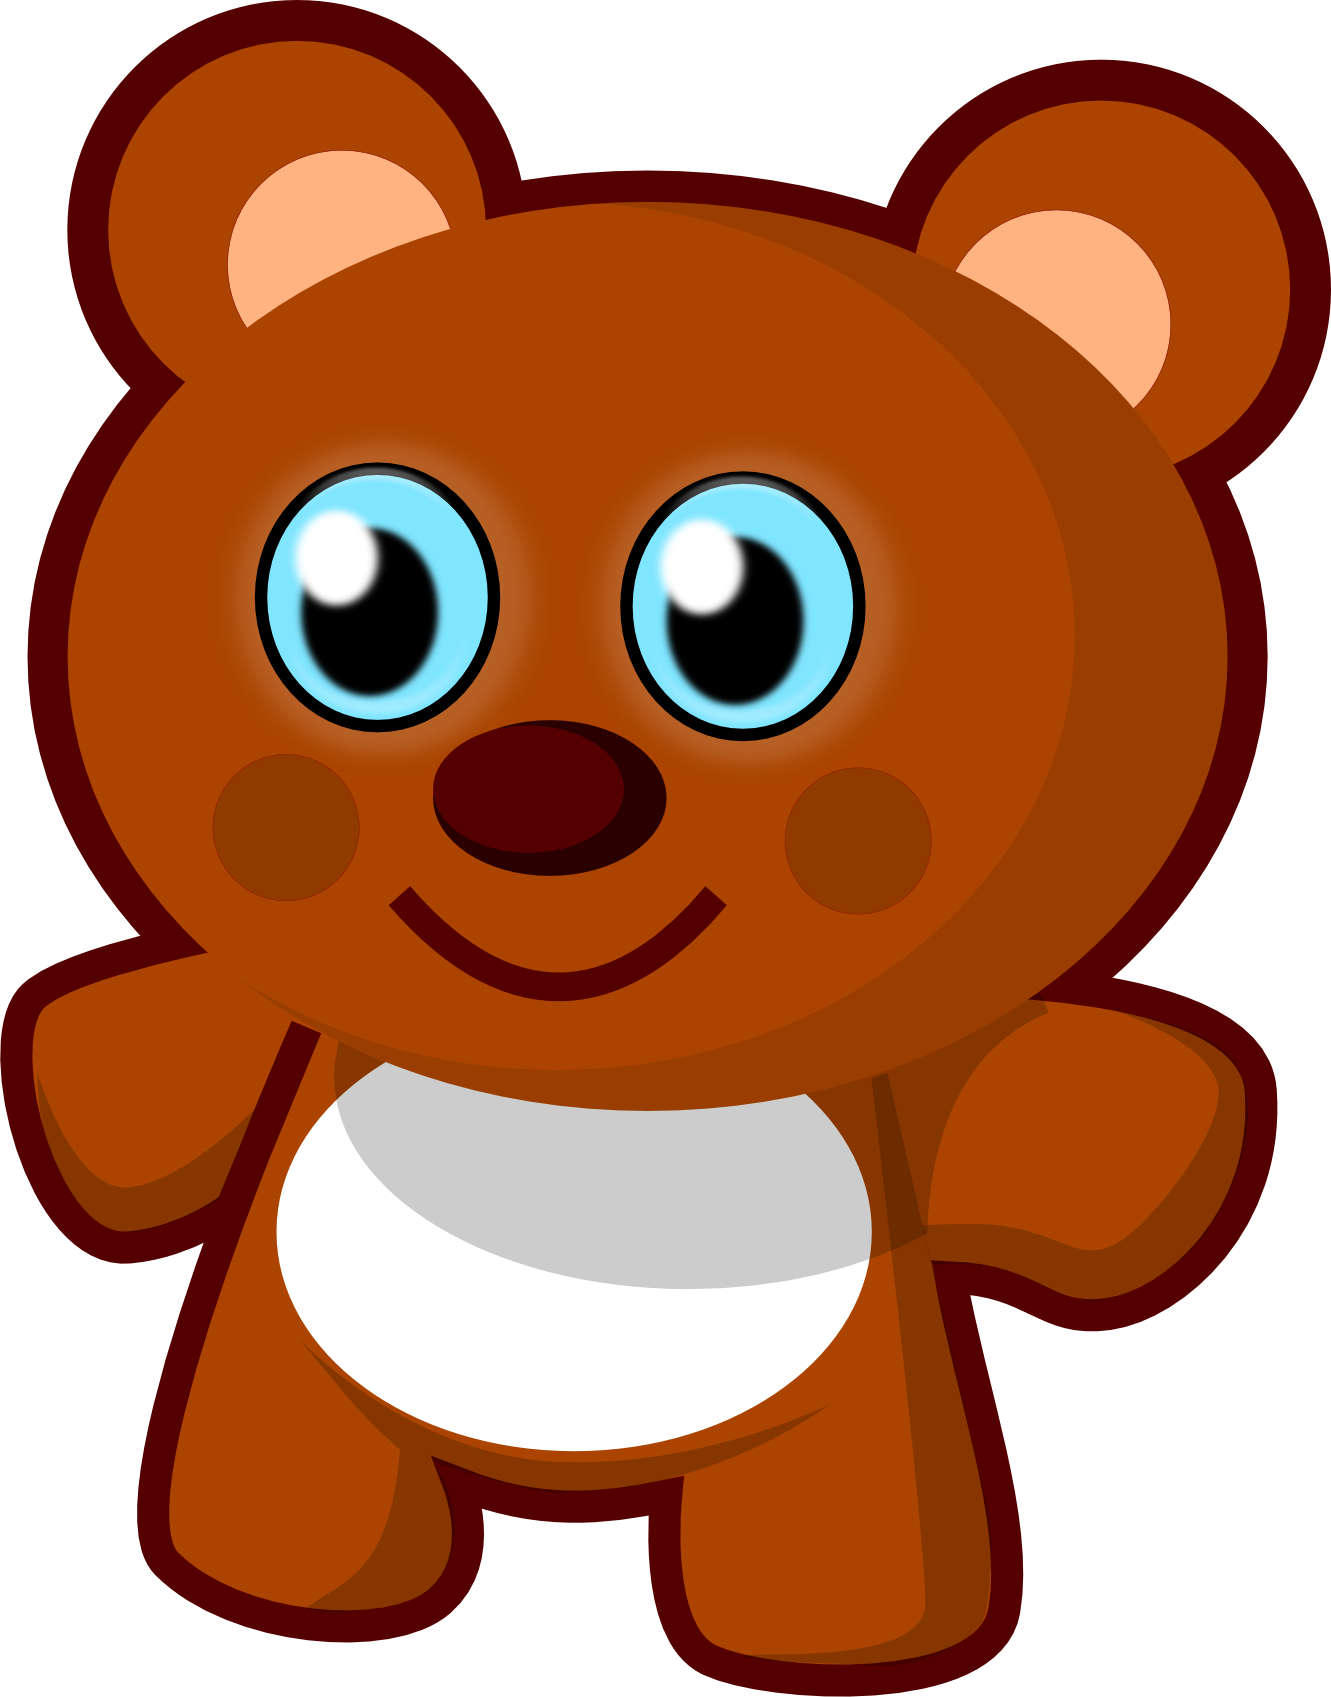 Teddy bear clip art free clip - Cute Bear Clipart